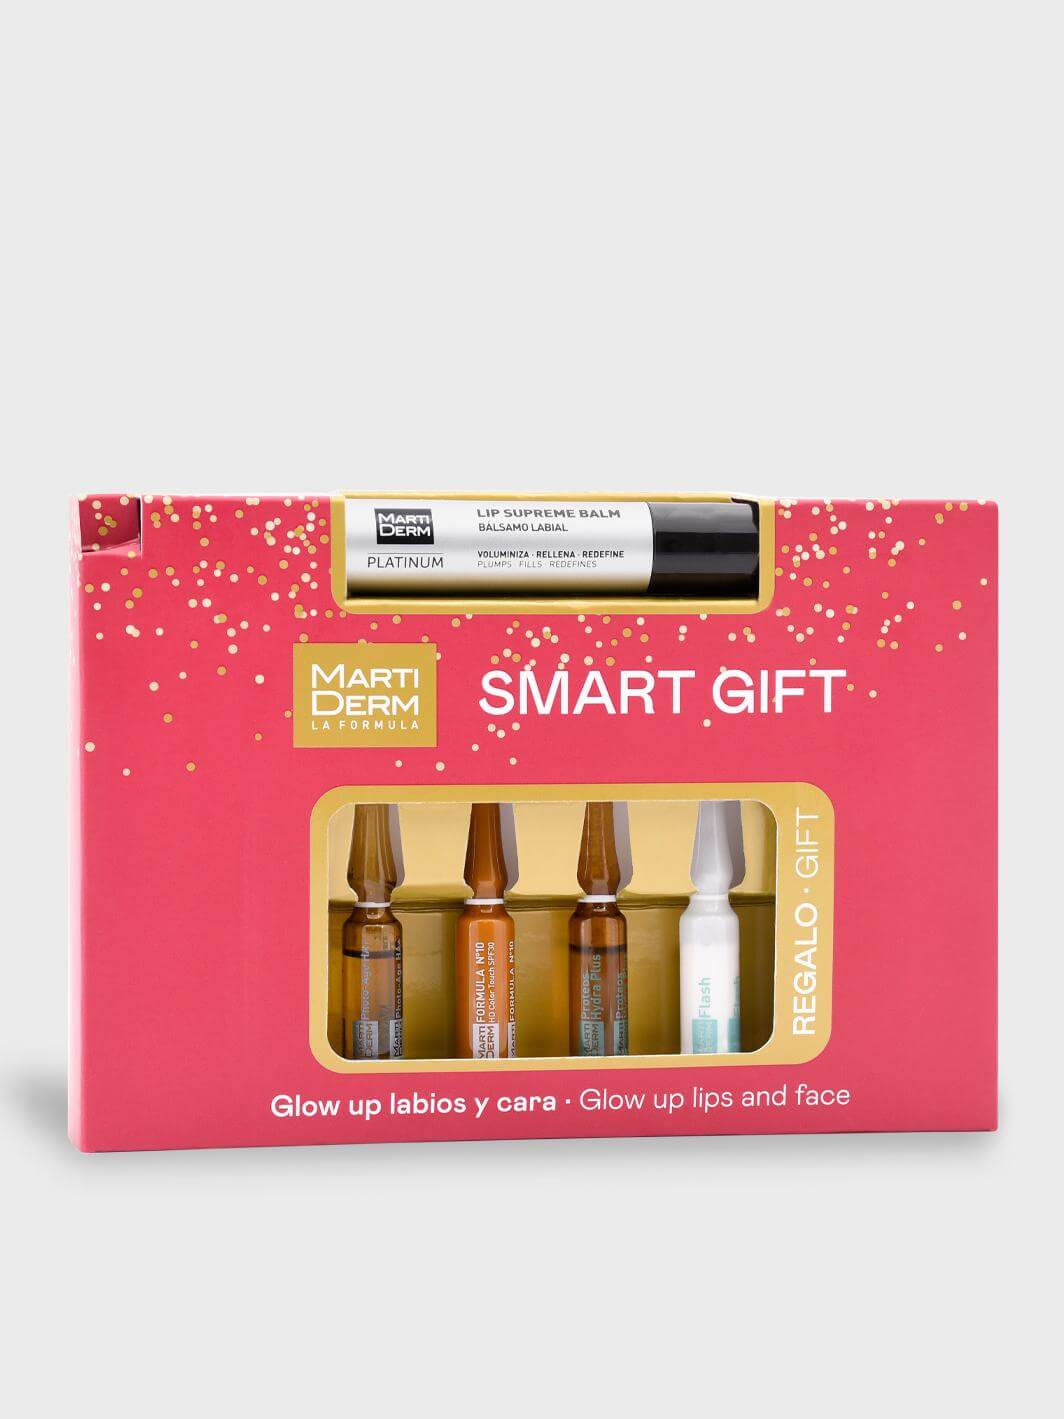 Smart Gift Pack - Efecto buena cara 